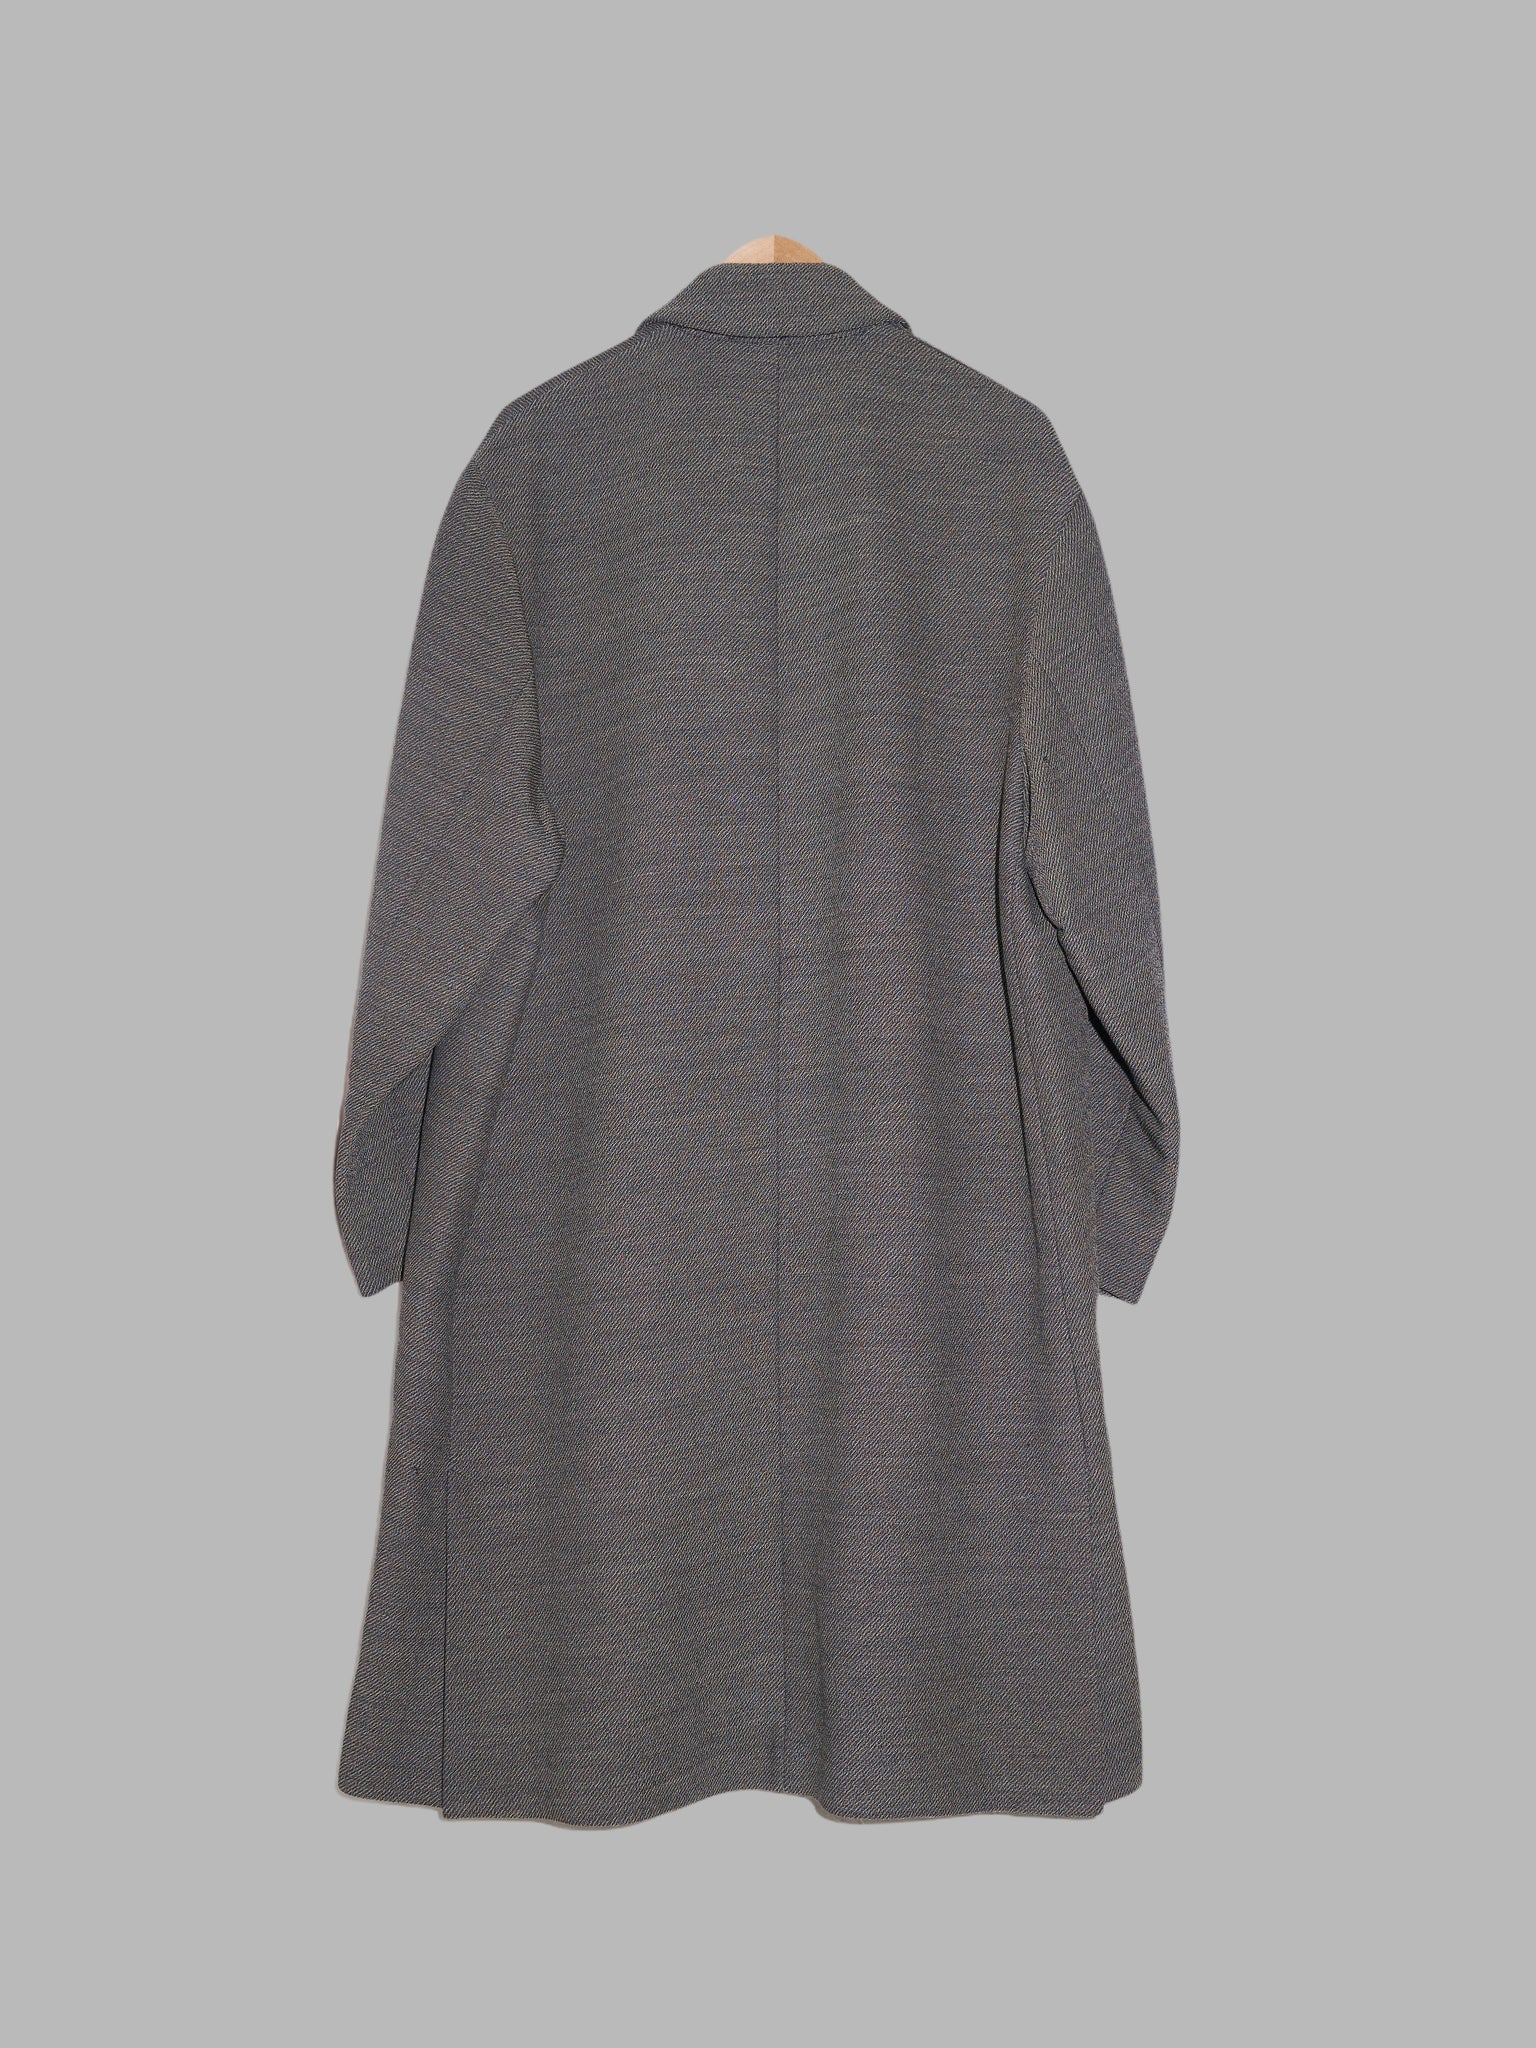 Kenzo Homme 1990s textured grey wool nylon mackintosh coat - mens 3 L M